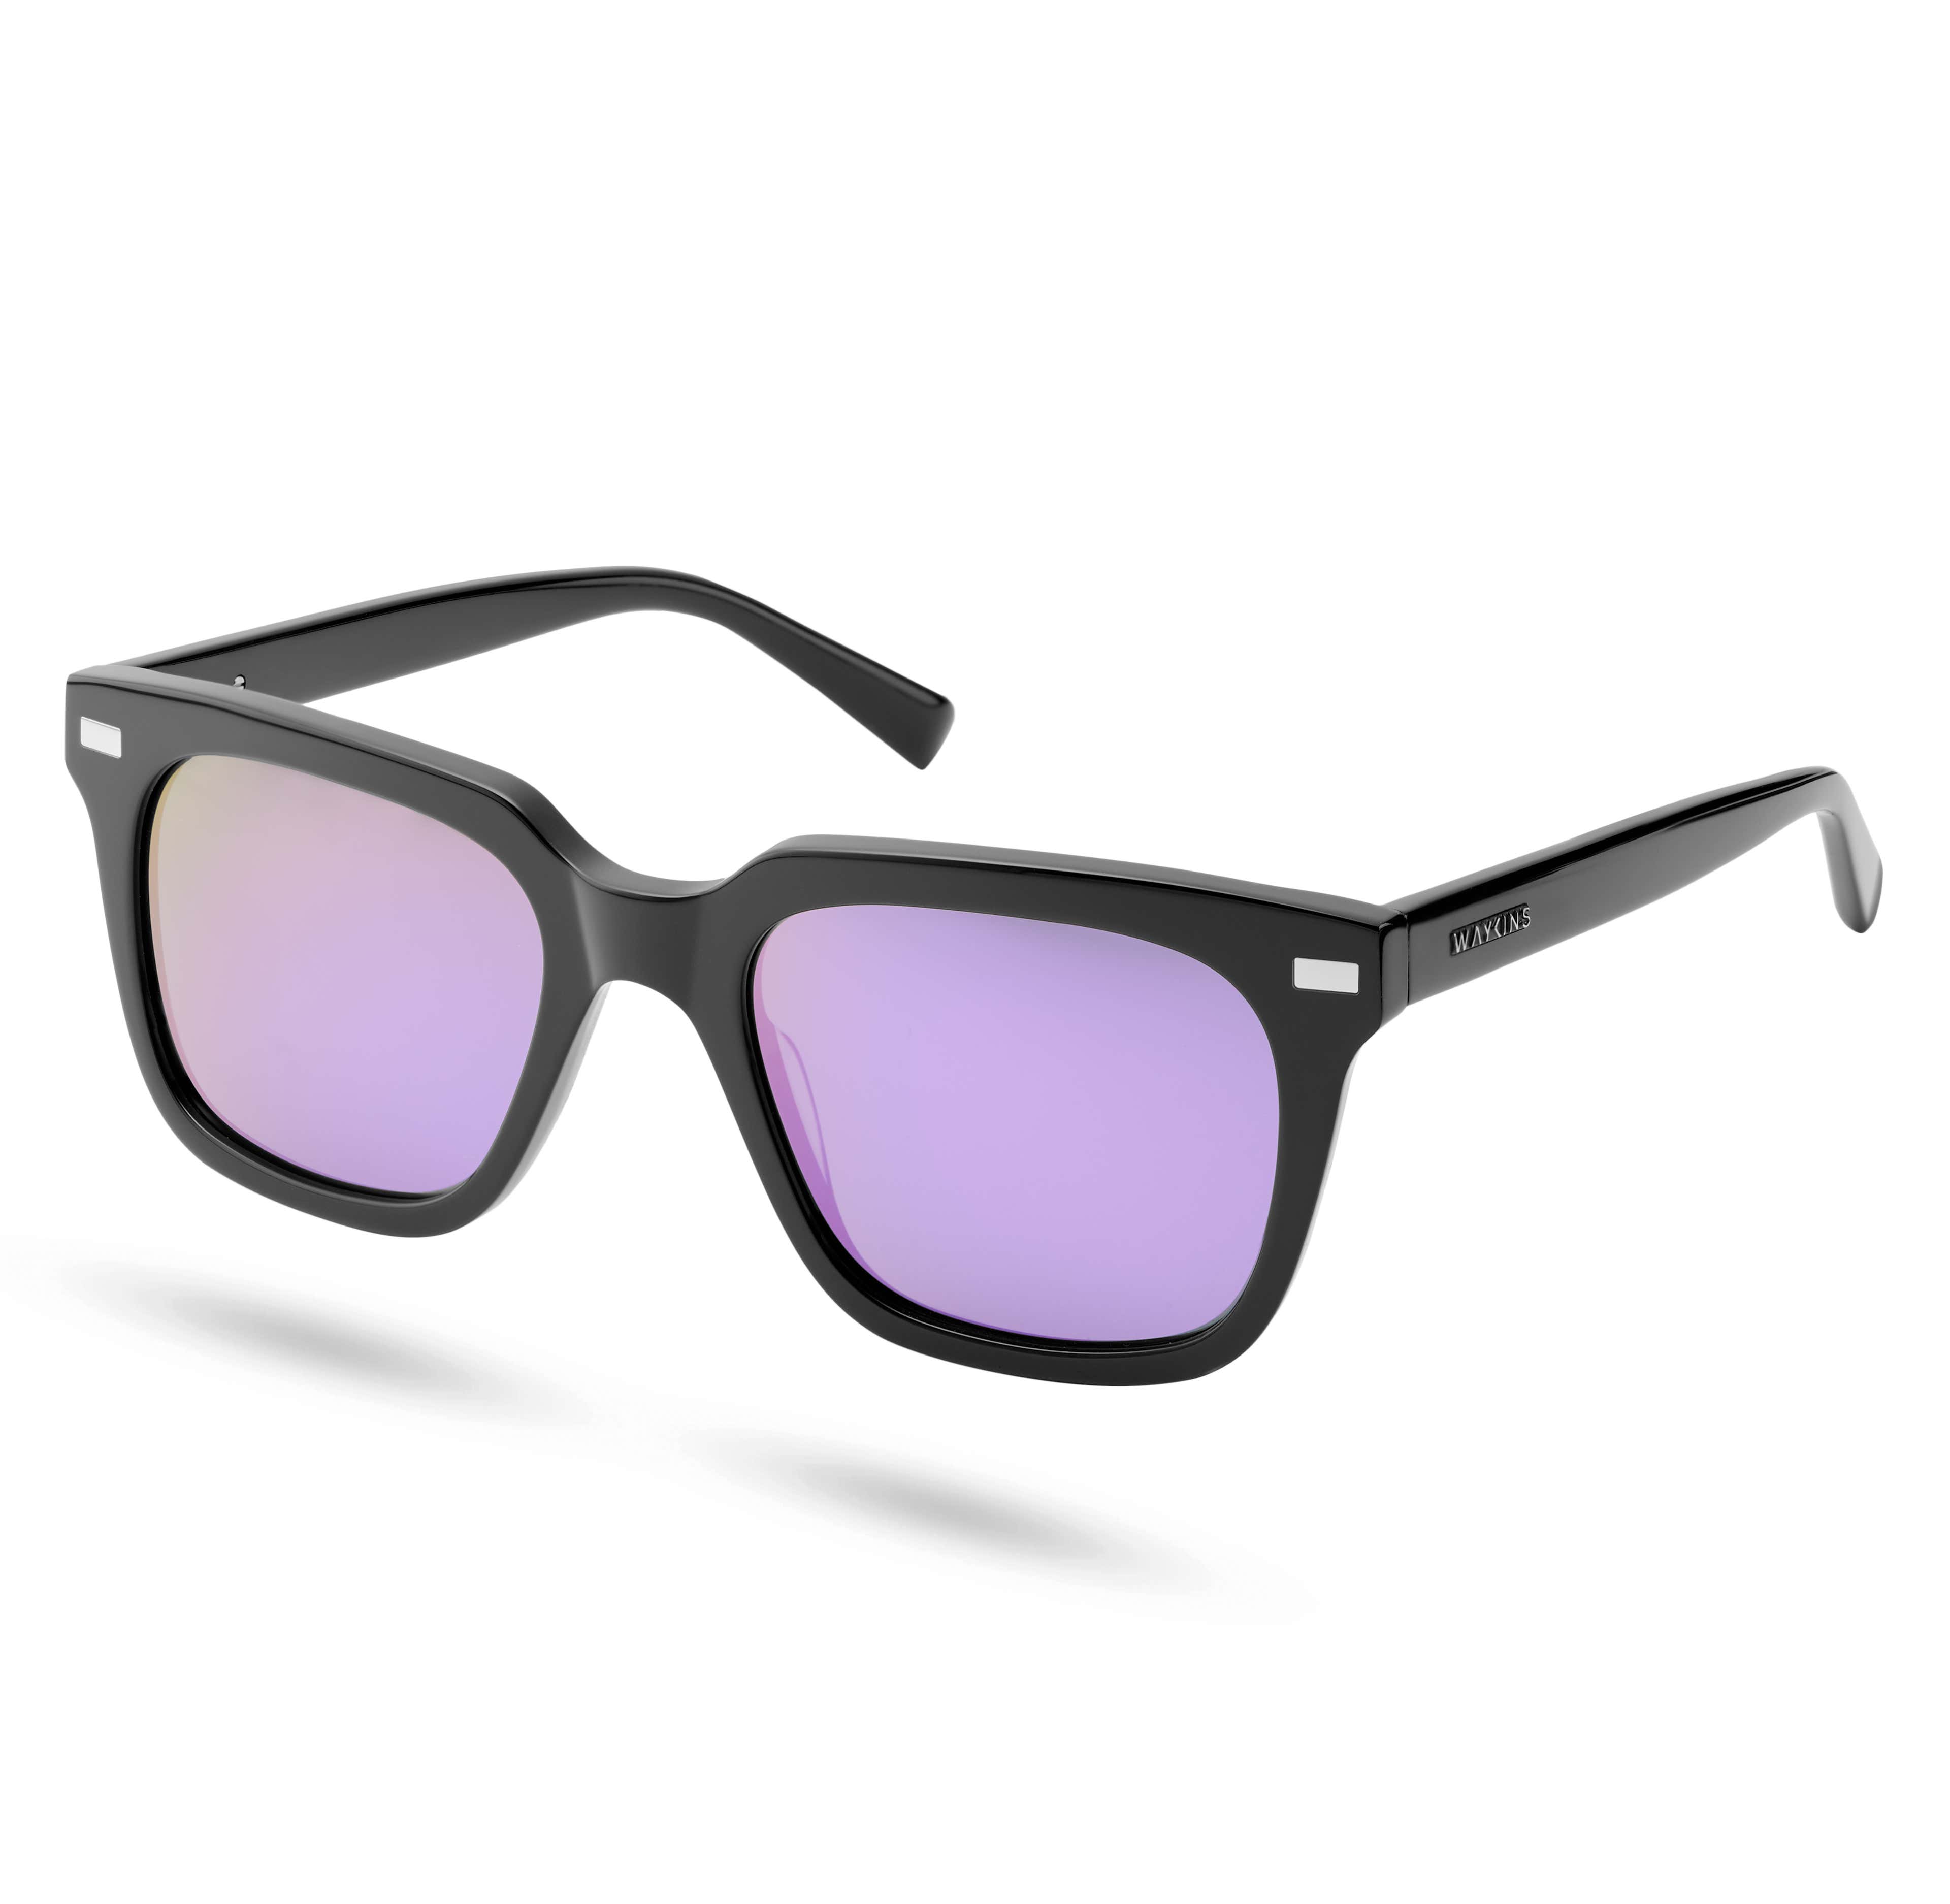 Ochelari de soare Wolfgang Thea polarizați negru și violet 